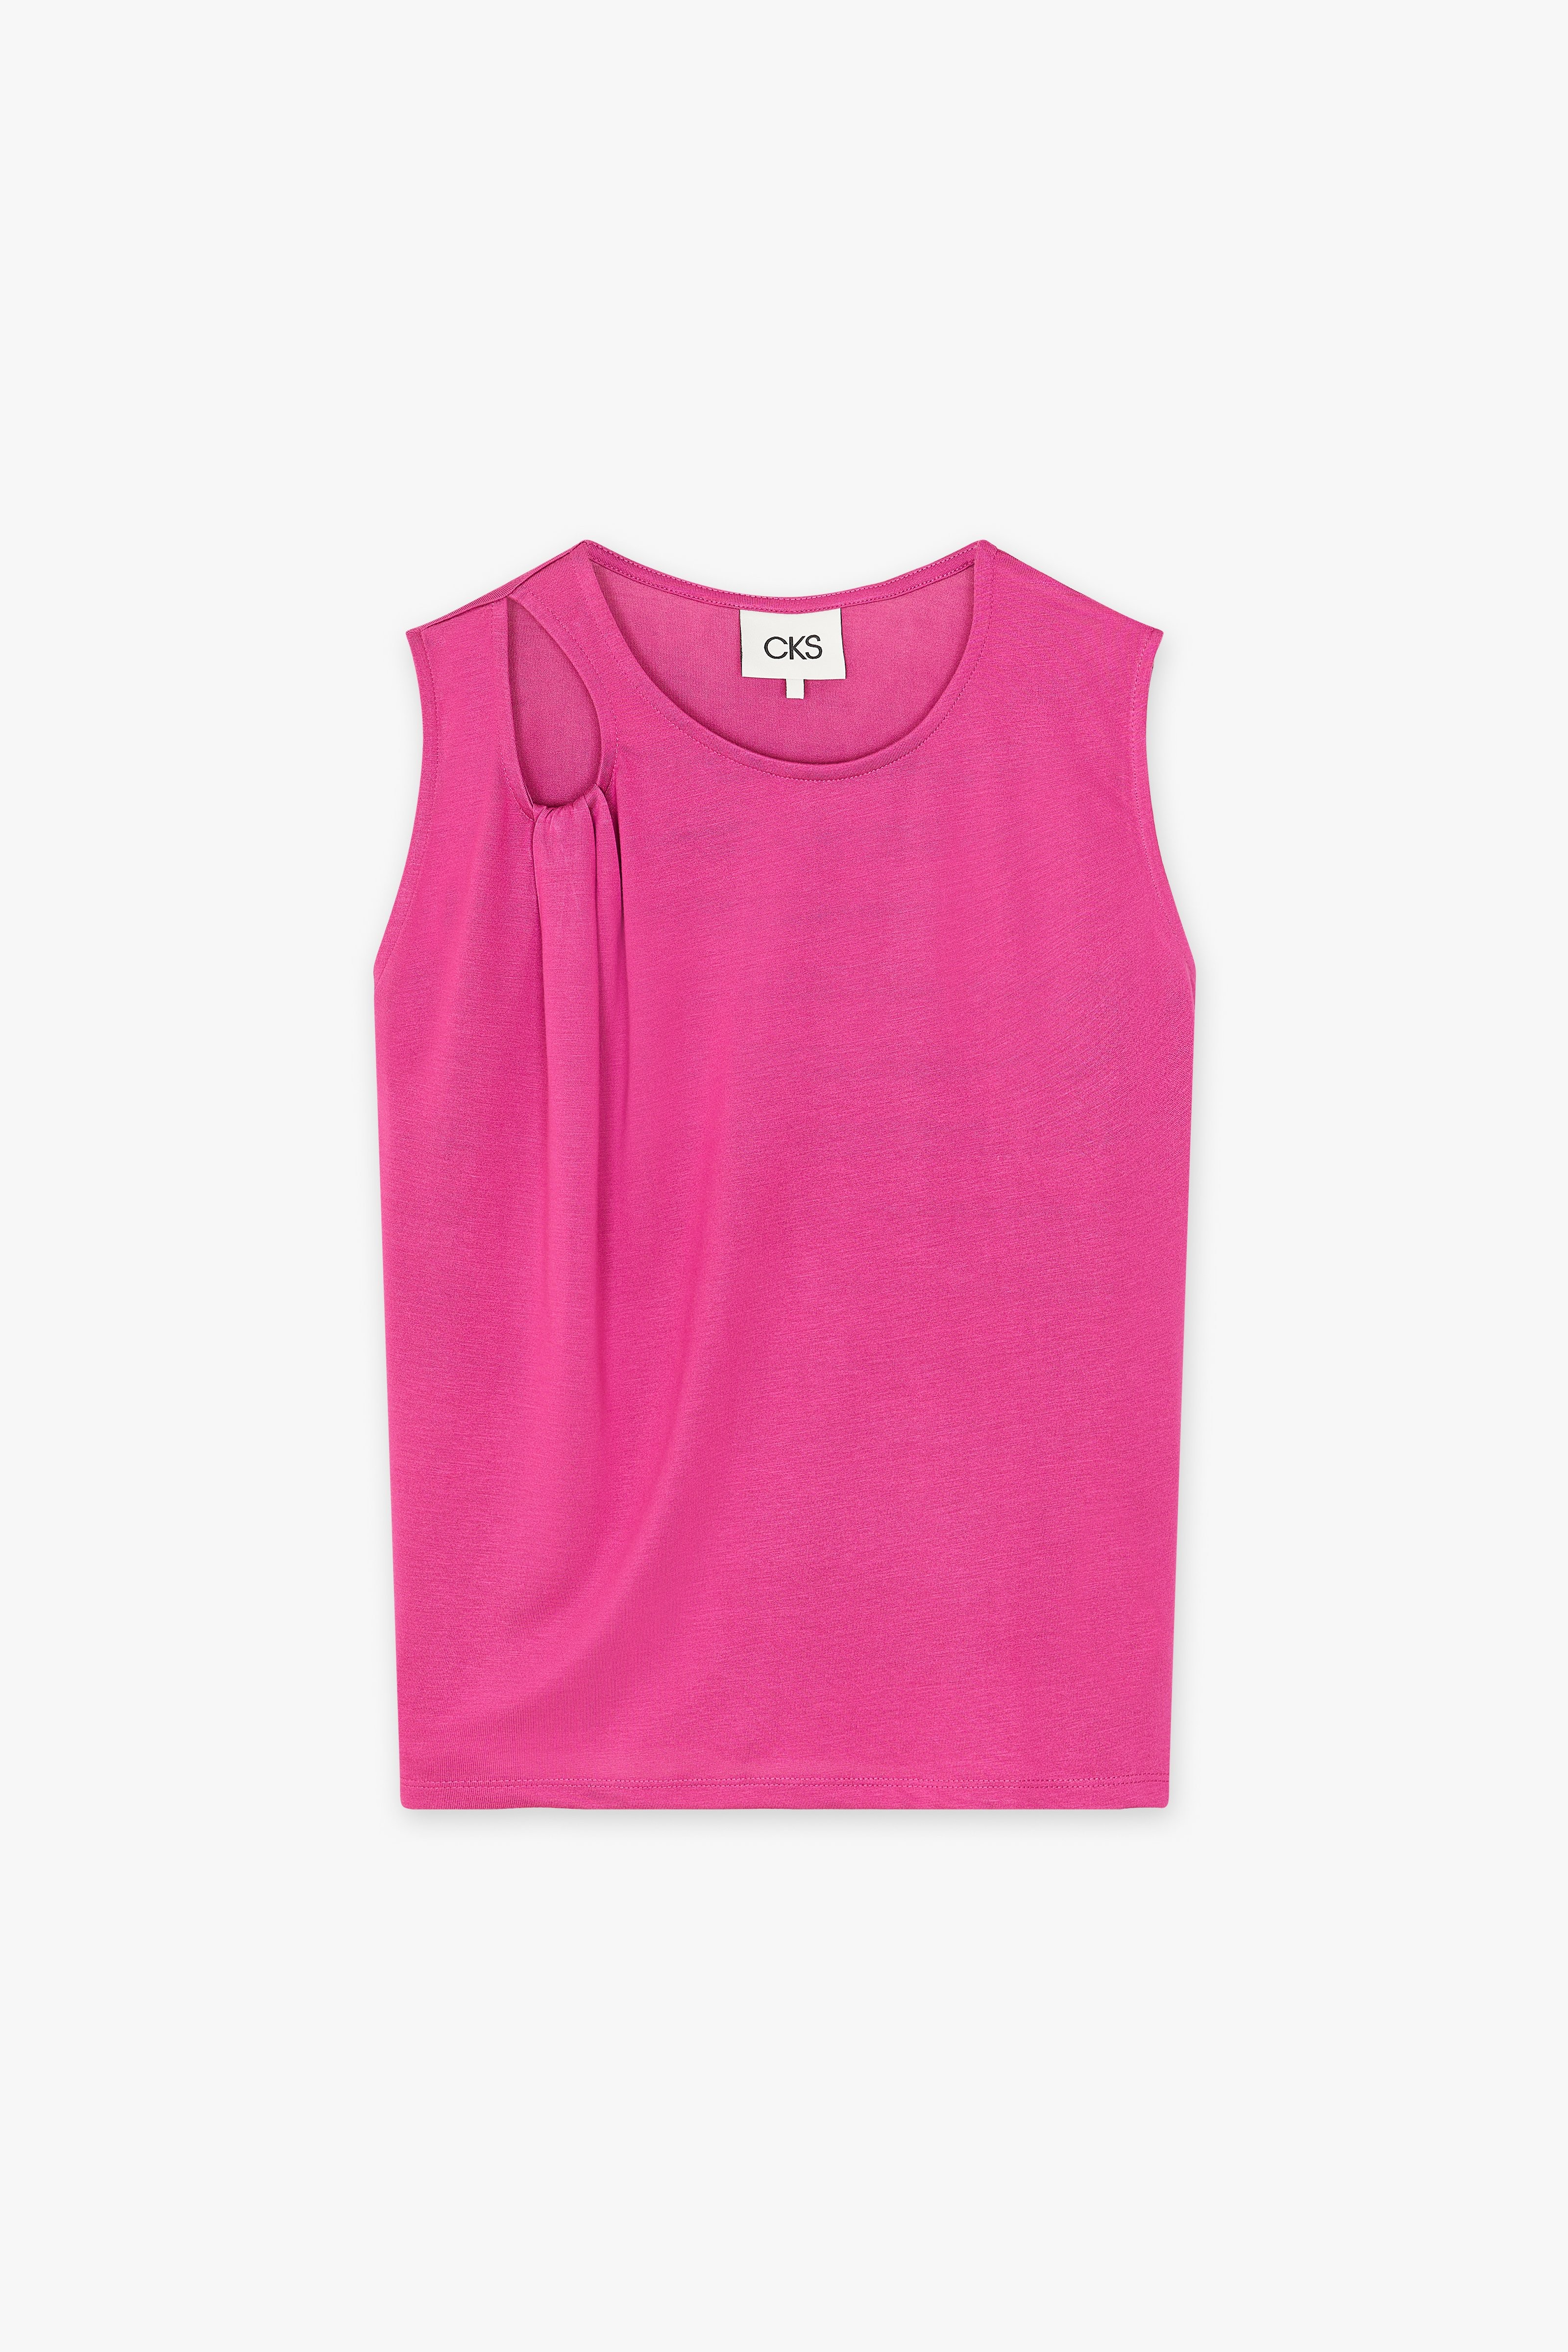 CKS Dames - SOON - sleeveless top - pink